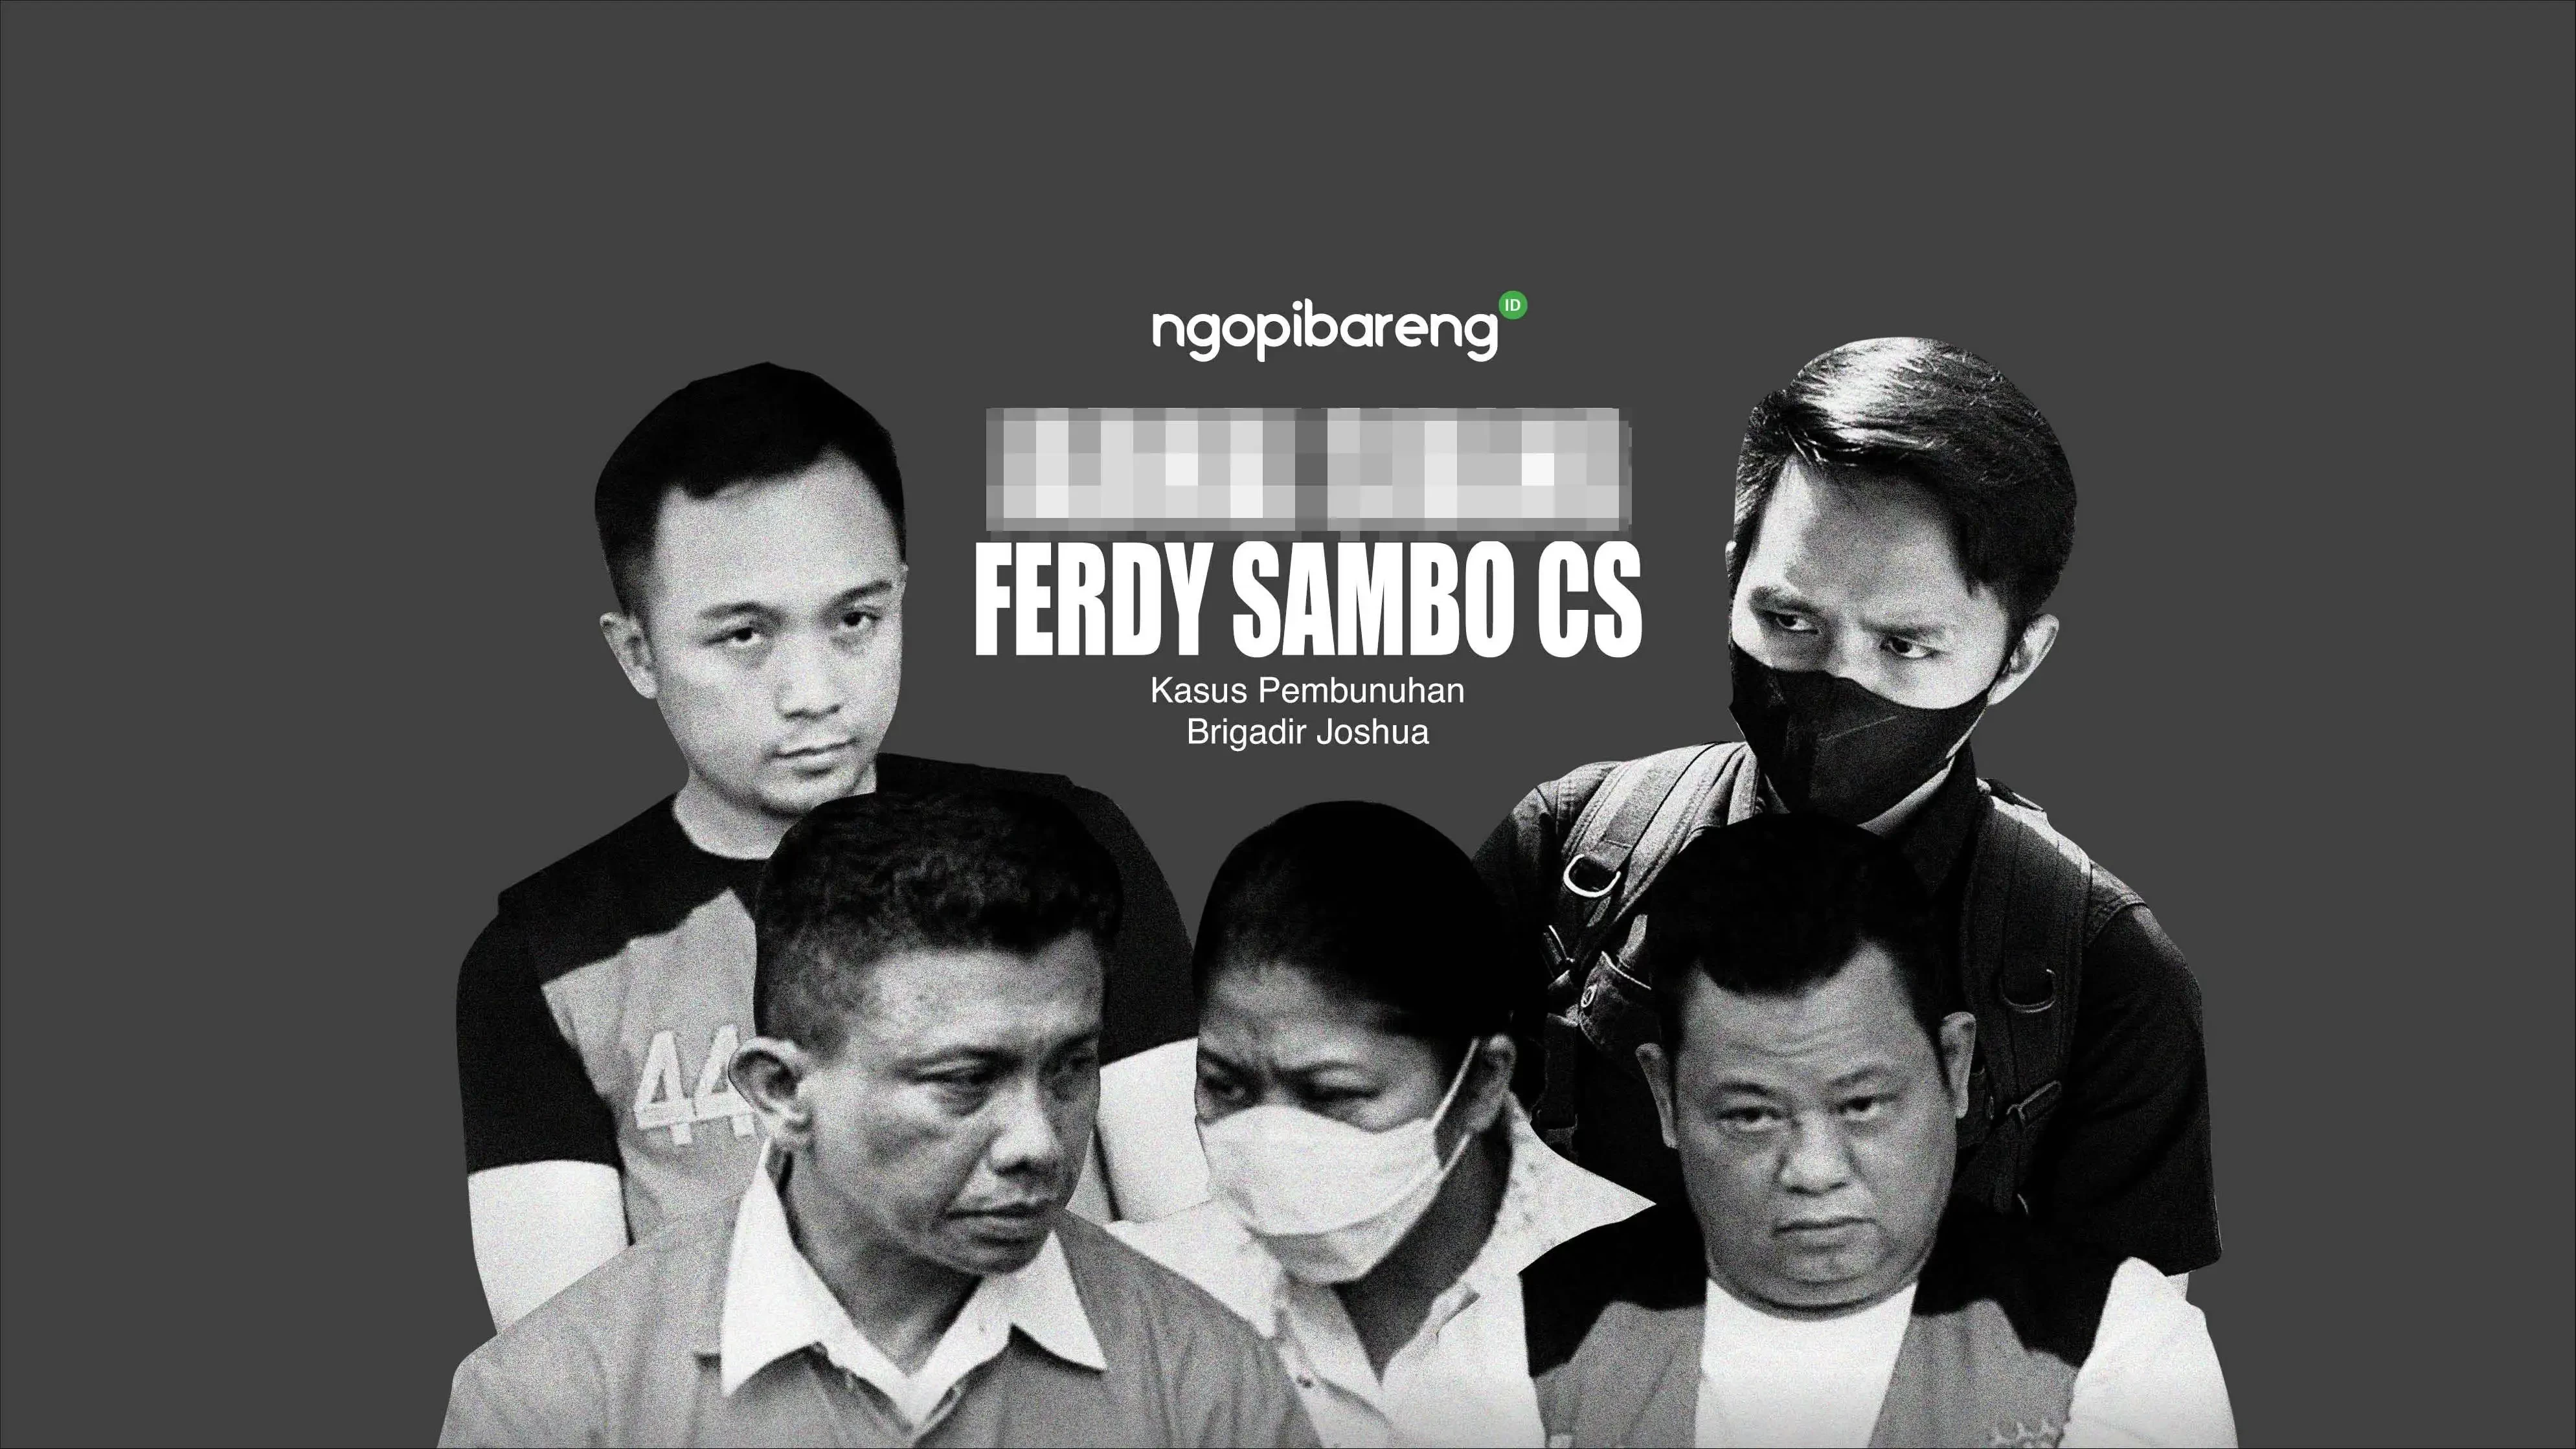 Terdakwa Ferdy Sambo bersama dengan para terdakwa lainnya. (Ilustrasi: Fa-Vidhi/Ngopibareng.id)